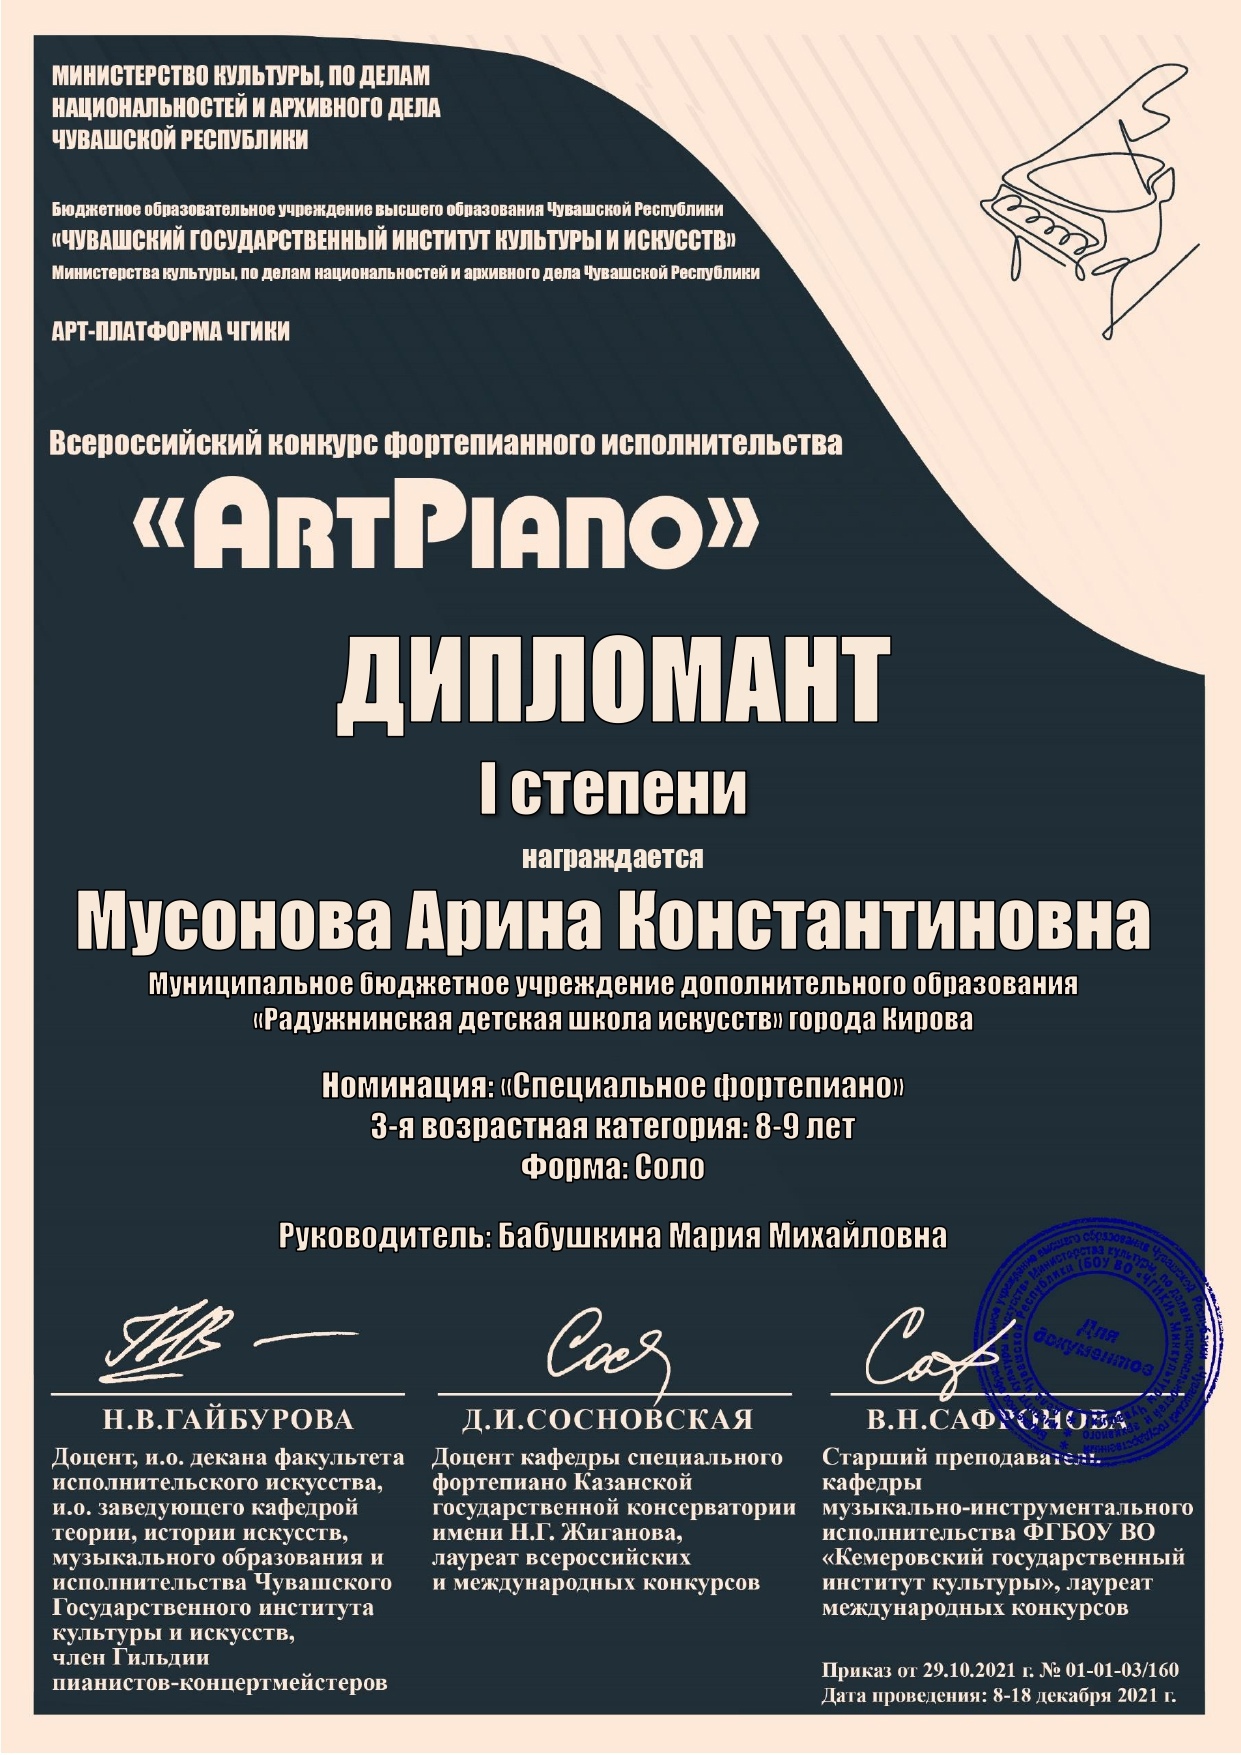 Всероссийский конкурс "ArtPiano"